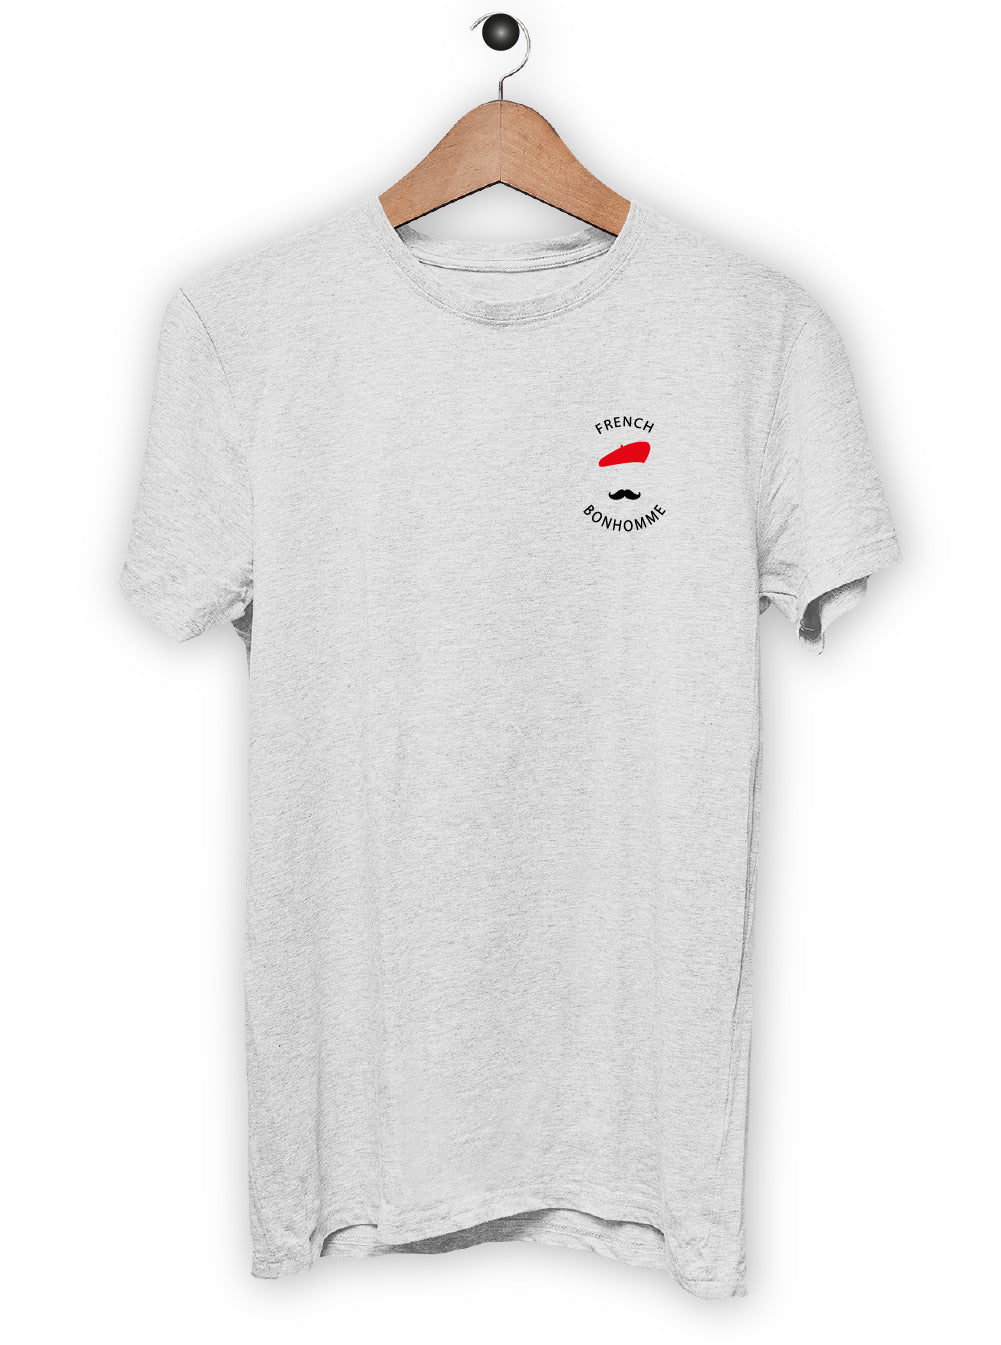 T-Shirt "FRENCH BONHOMME"